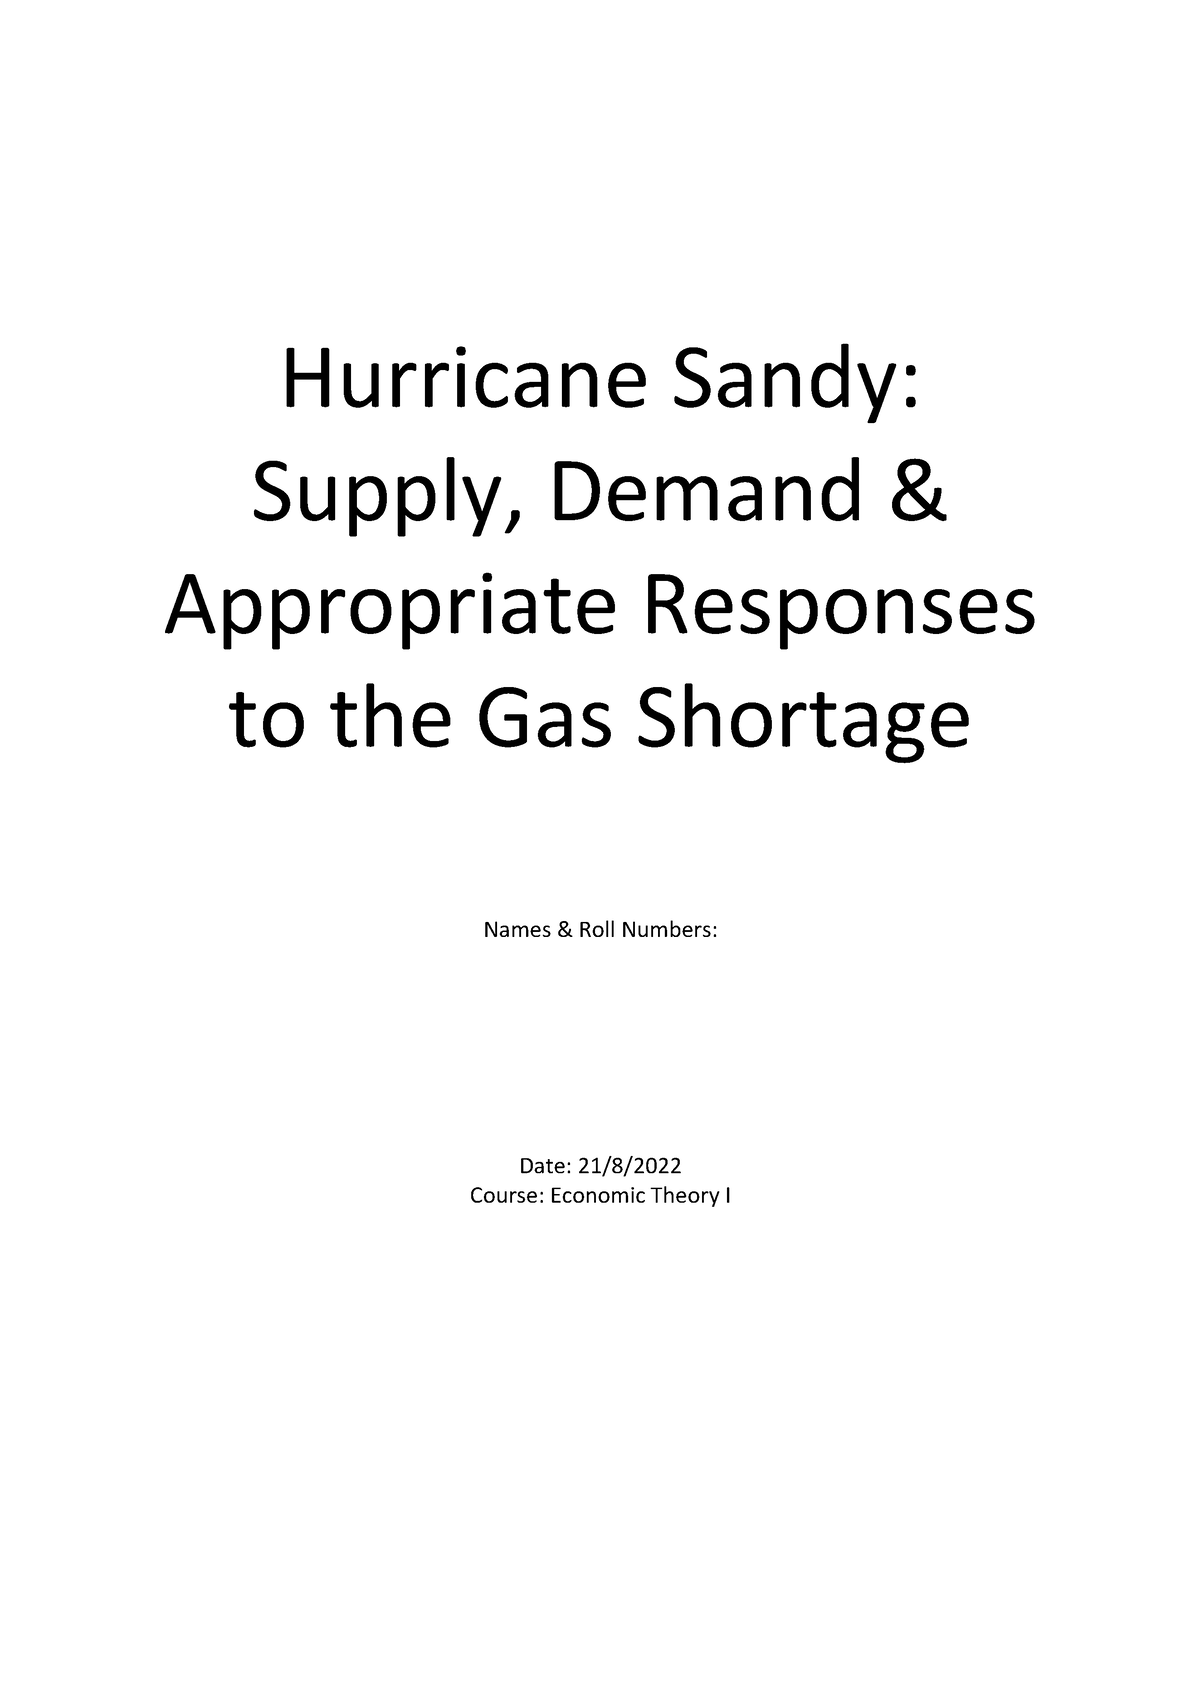 hurricane sandy case study quizlet